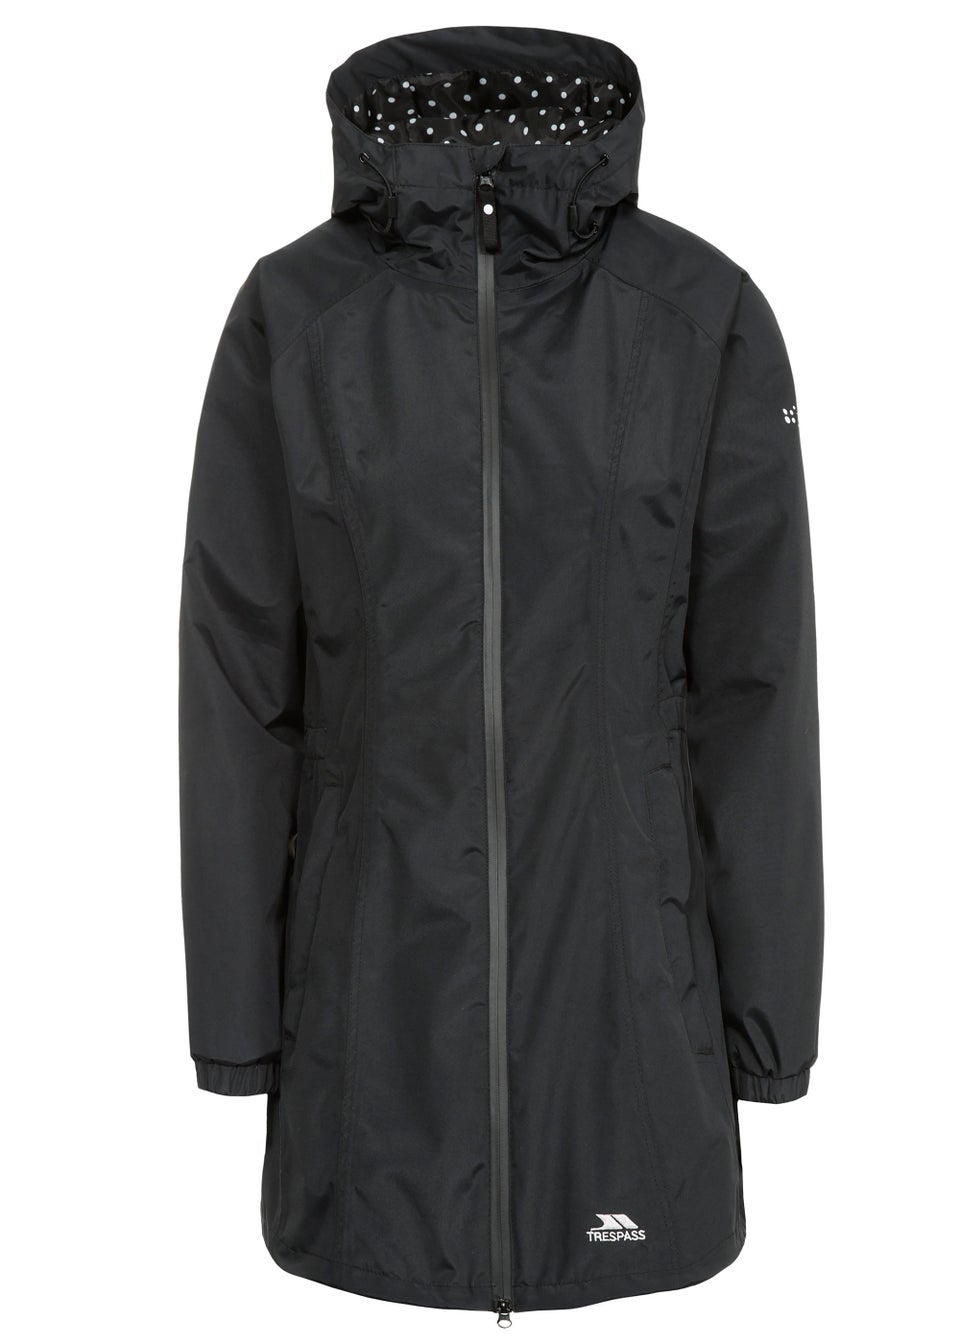 Trespass Daytrip Black Waterproof Lightweight Jacket